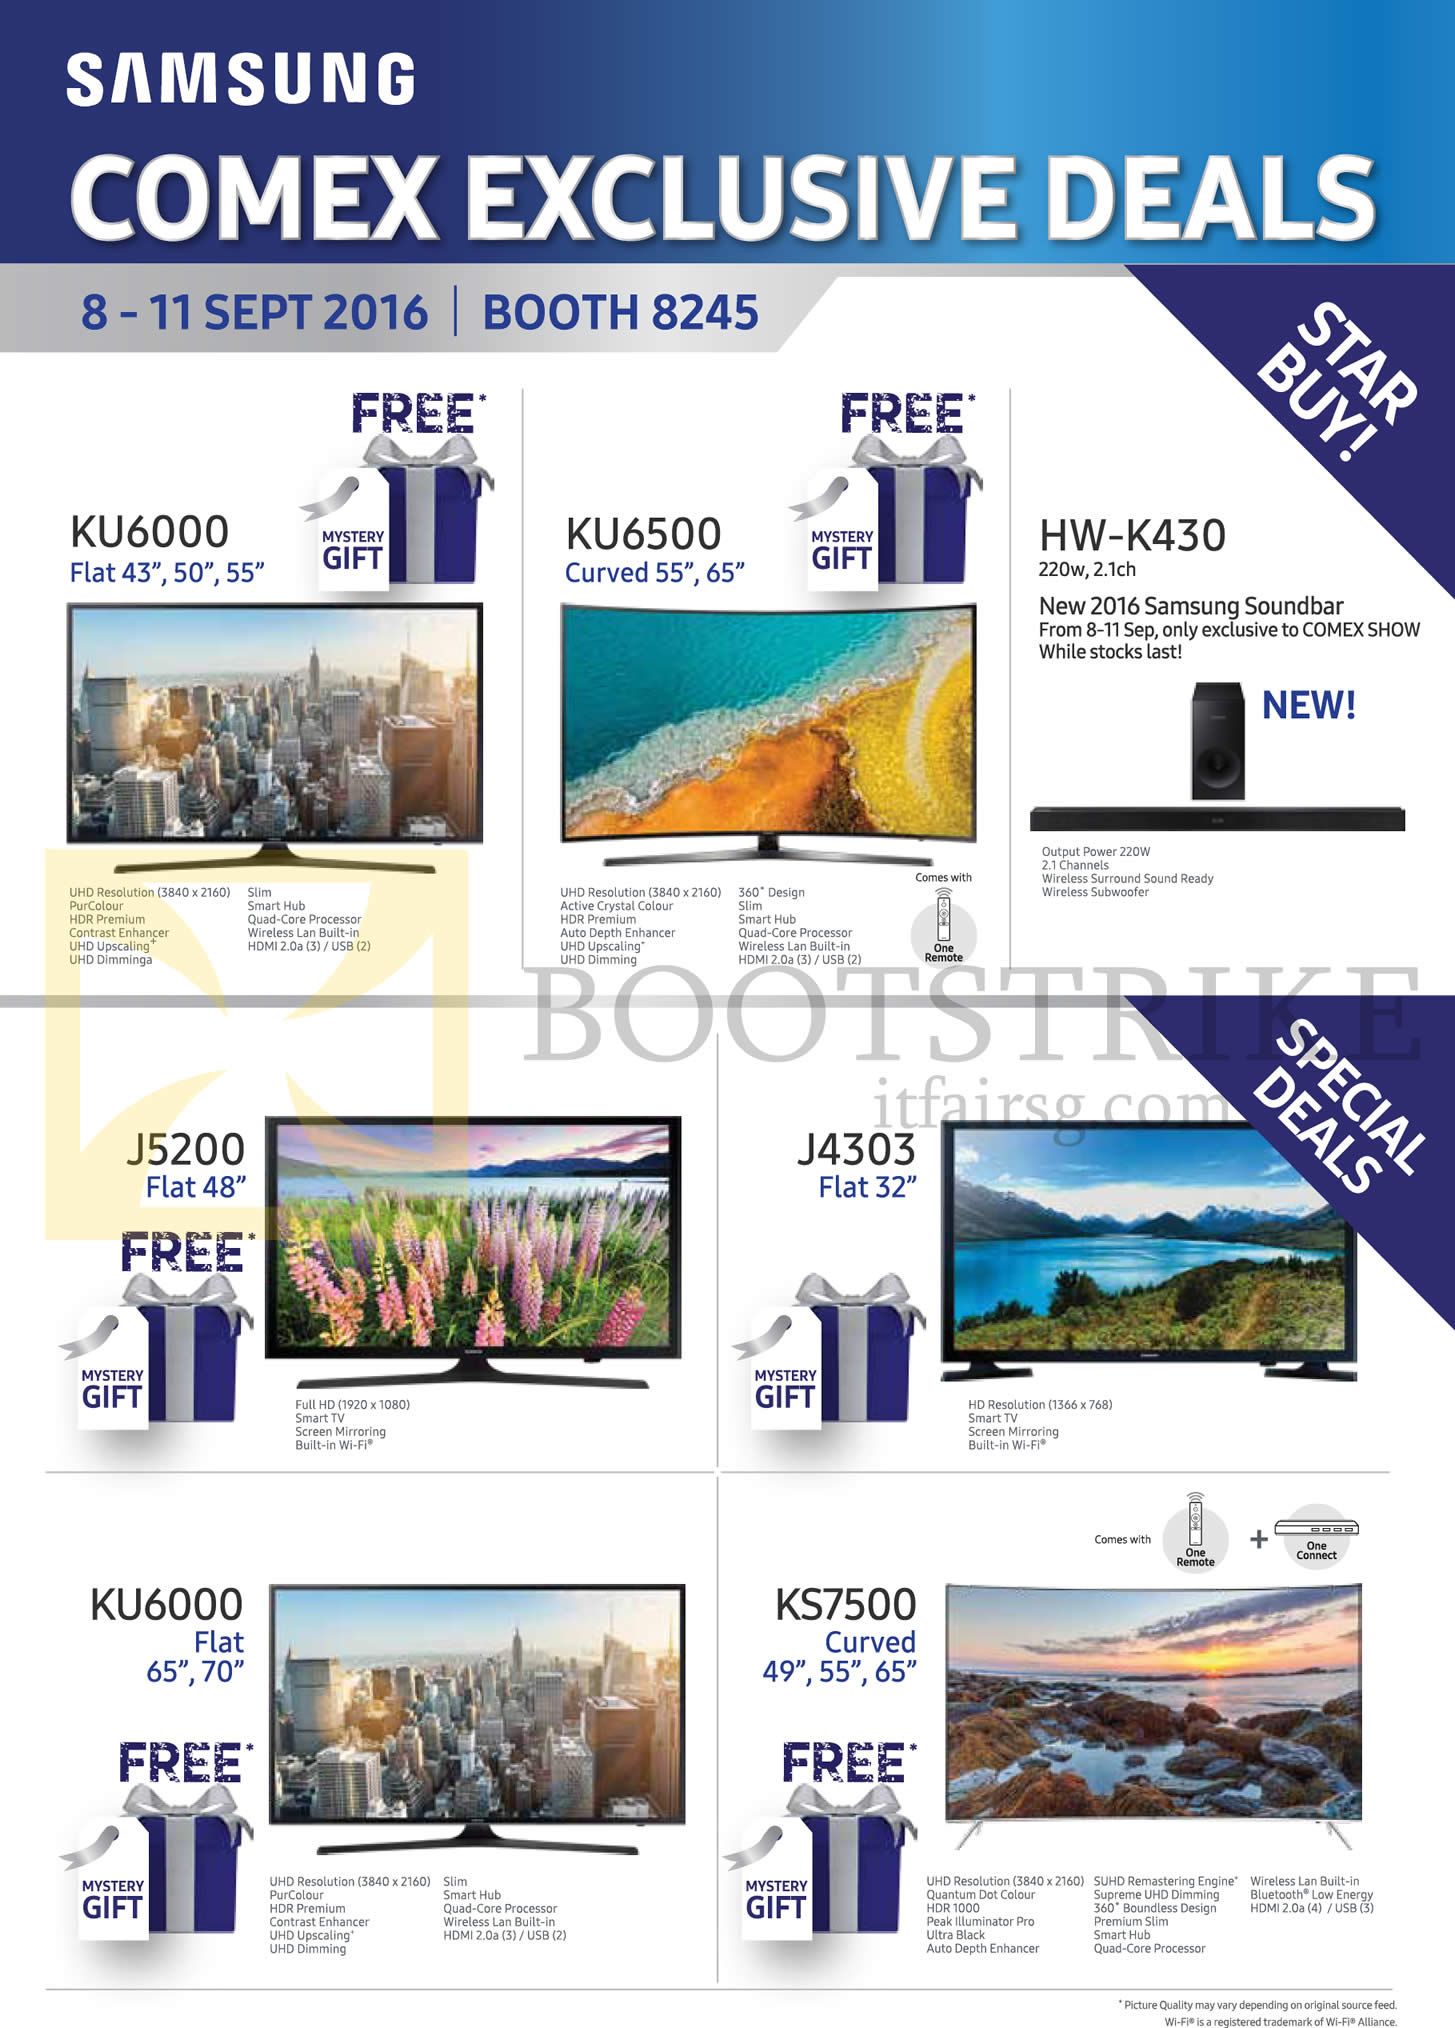 COMEX 2016 price list image brochure of Samsung TVs (No Prices) KU6000, KU6500, HW-K430, J5200, J4303, KS7500